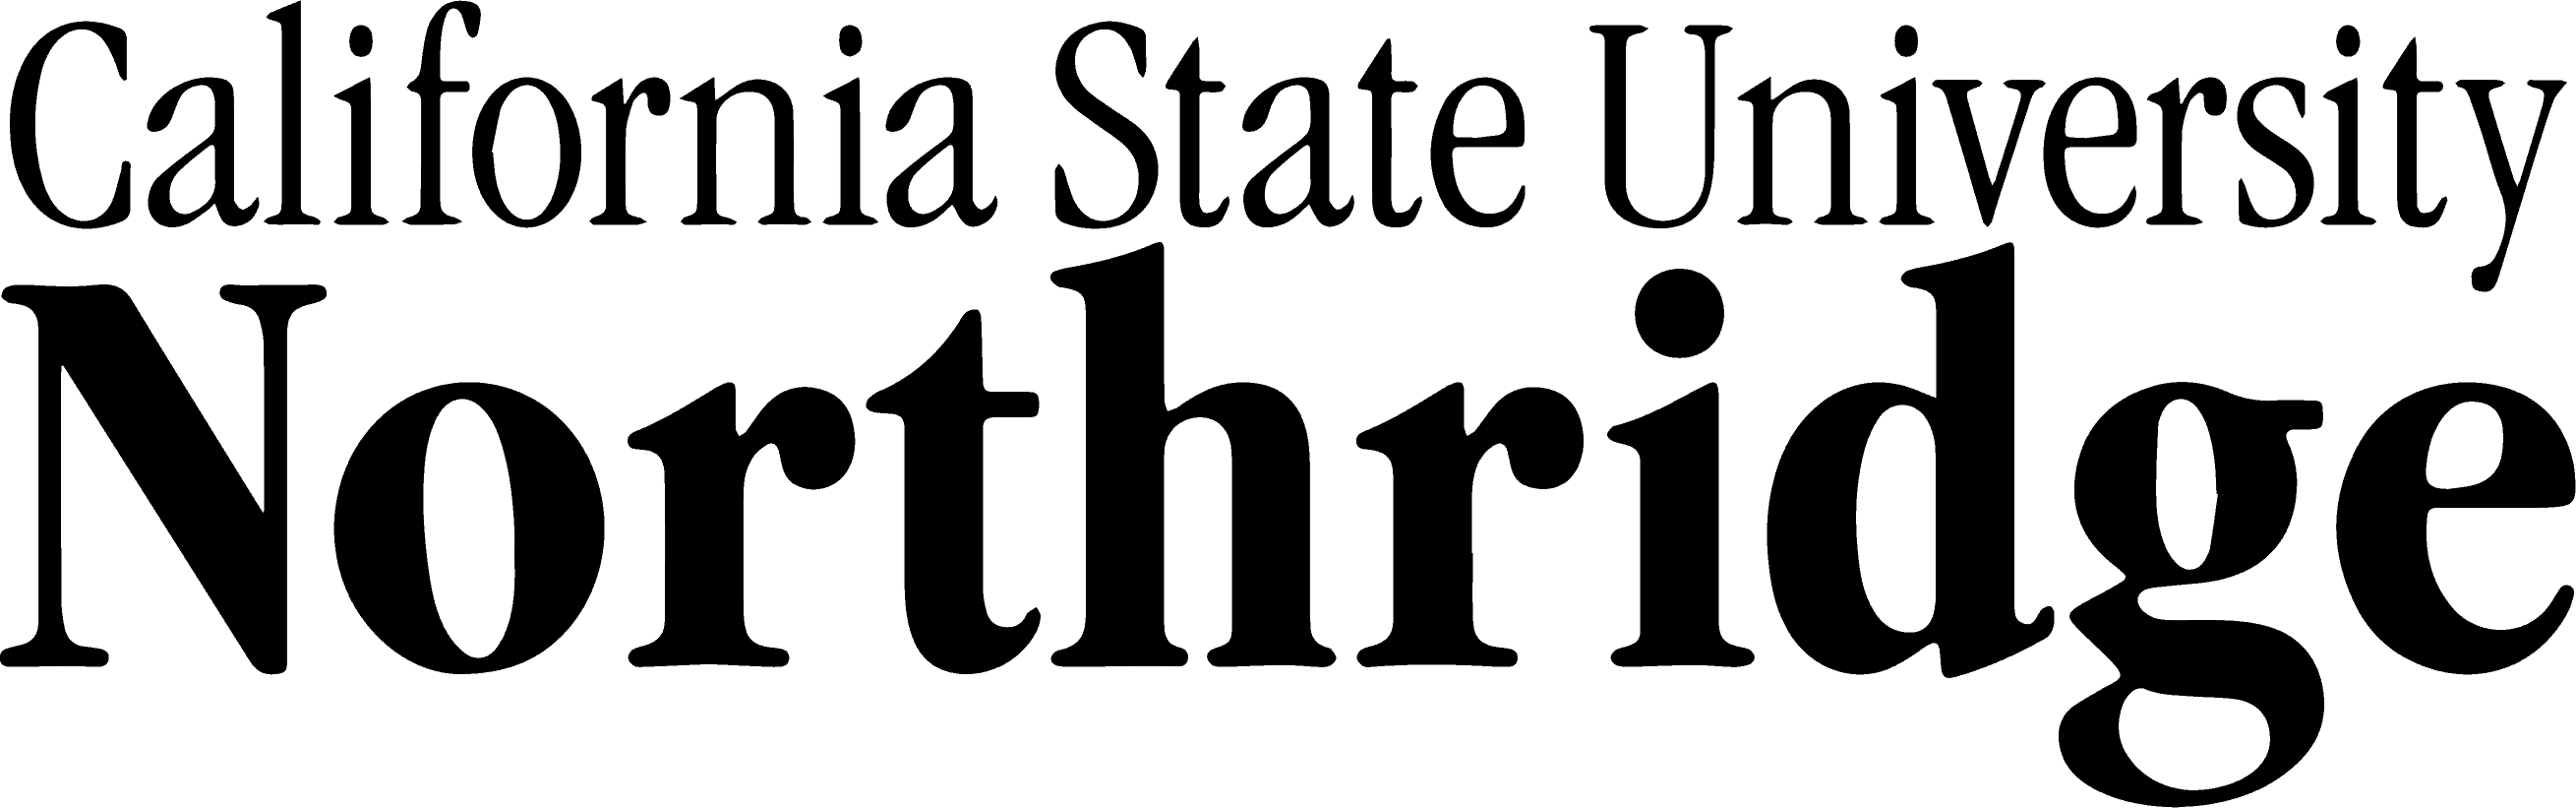 California State University Northridge logo in black